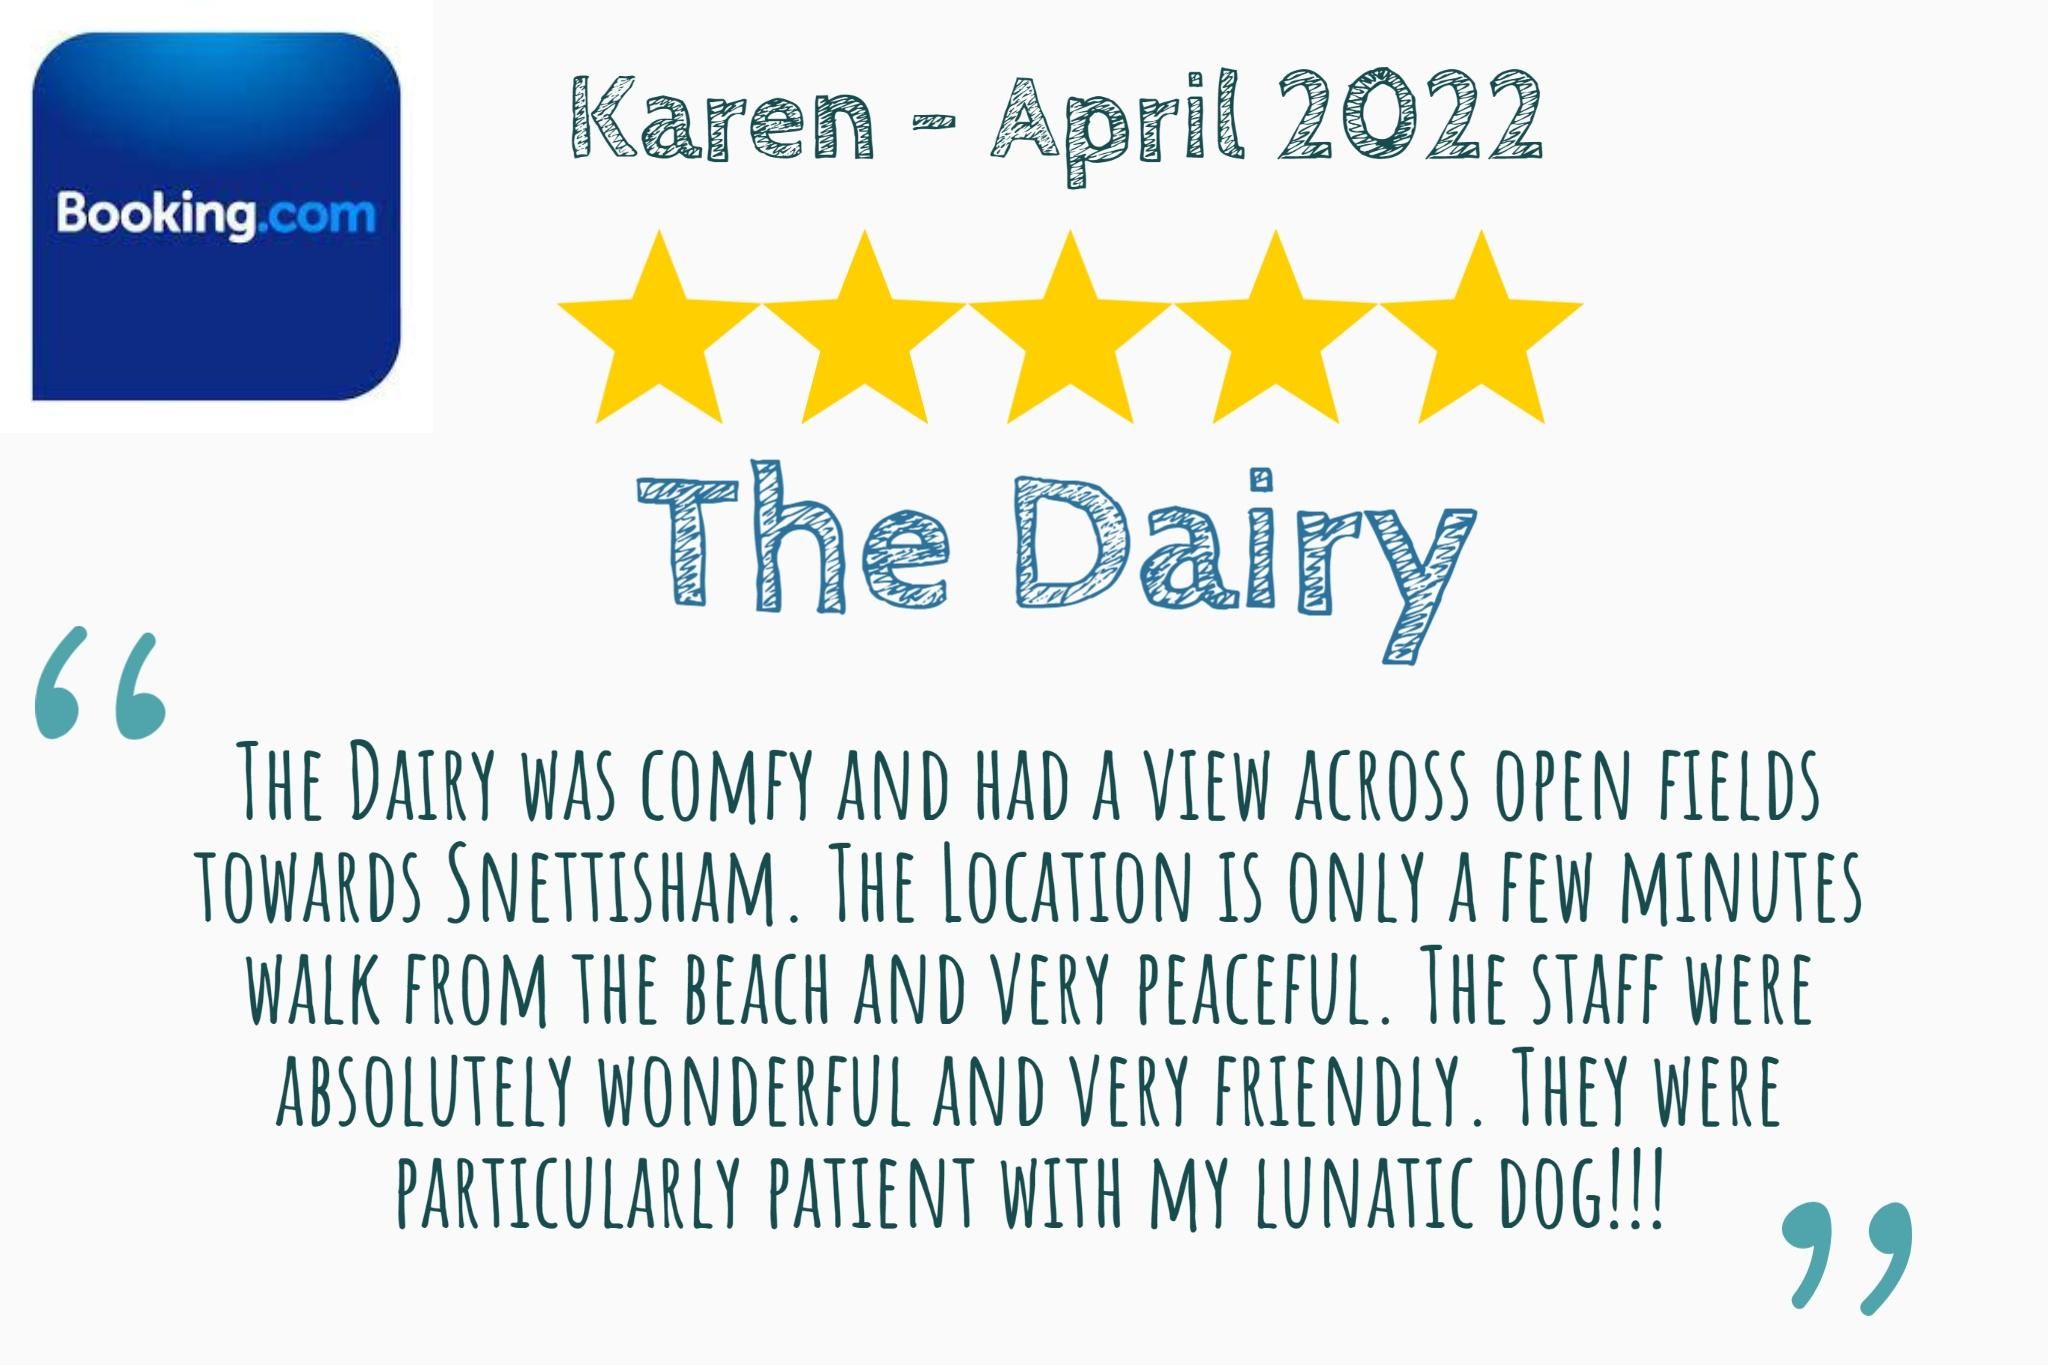 Karen's review about view across Snettisham